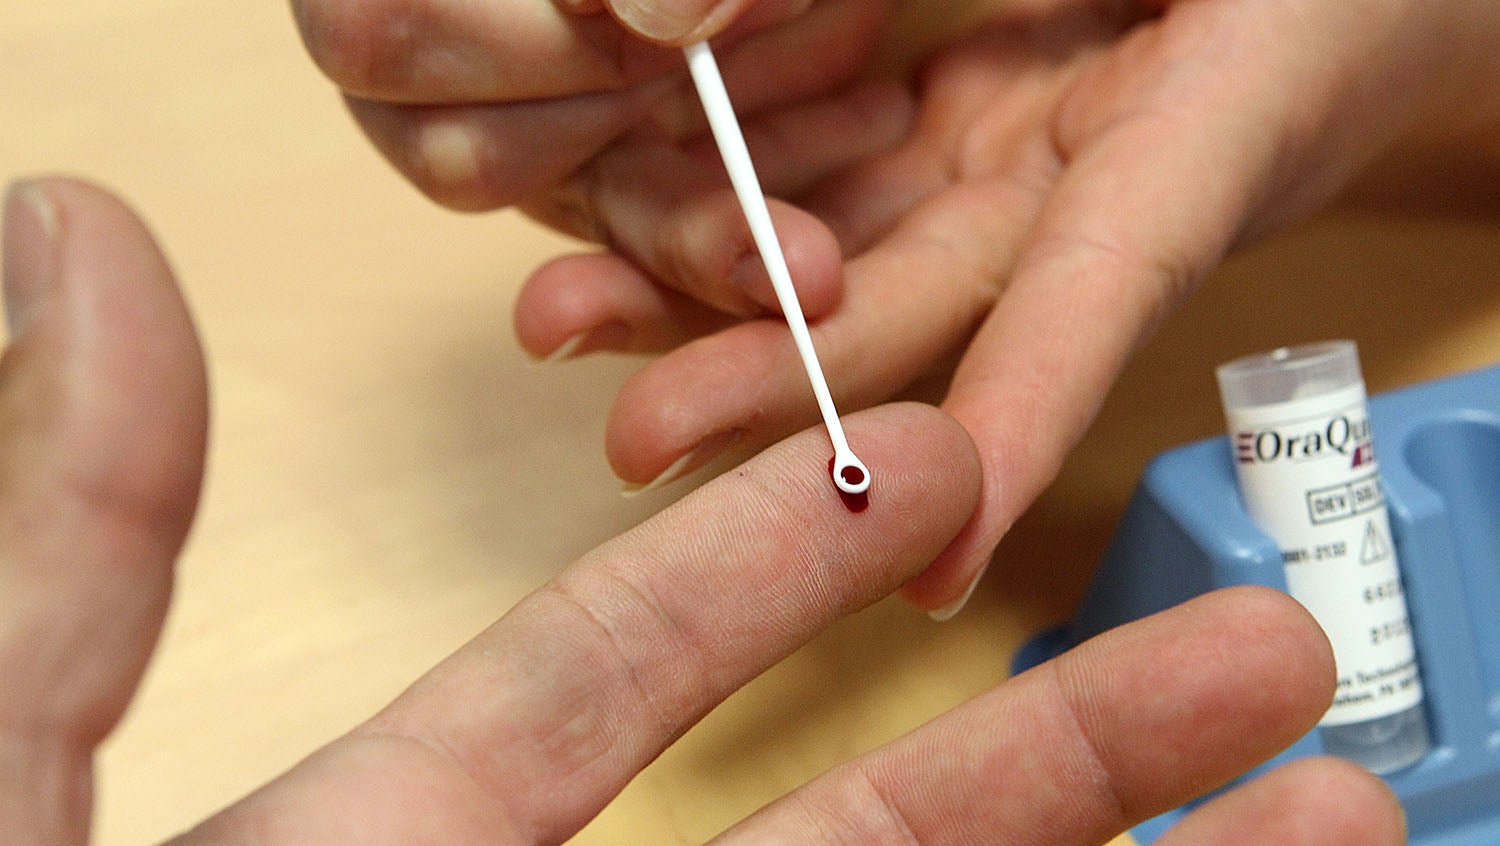 hepatitis c test, hcv testing during pandemic